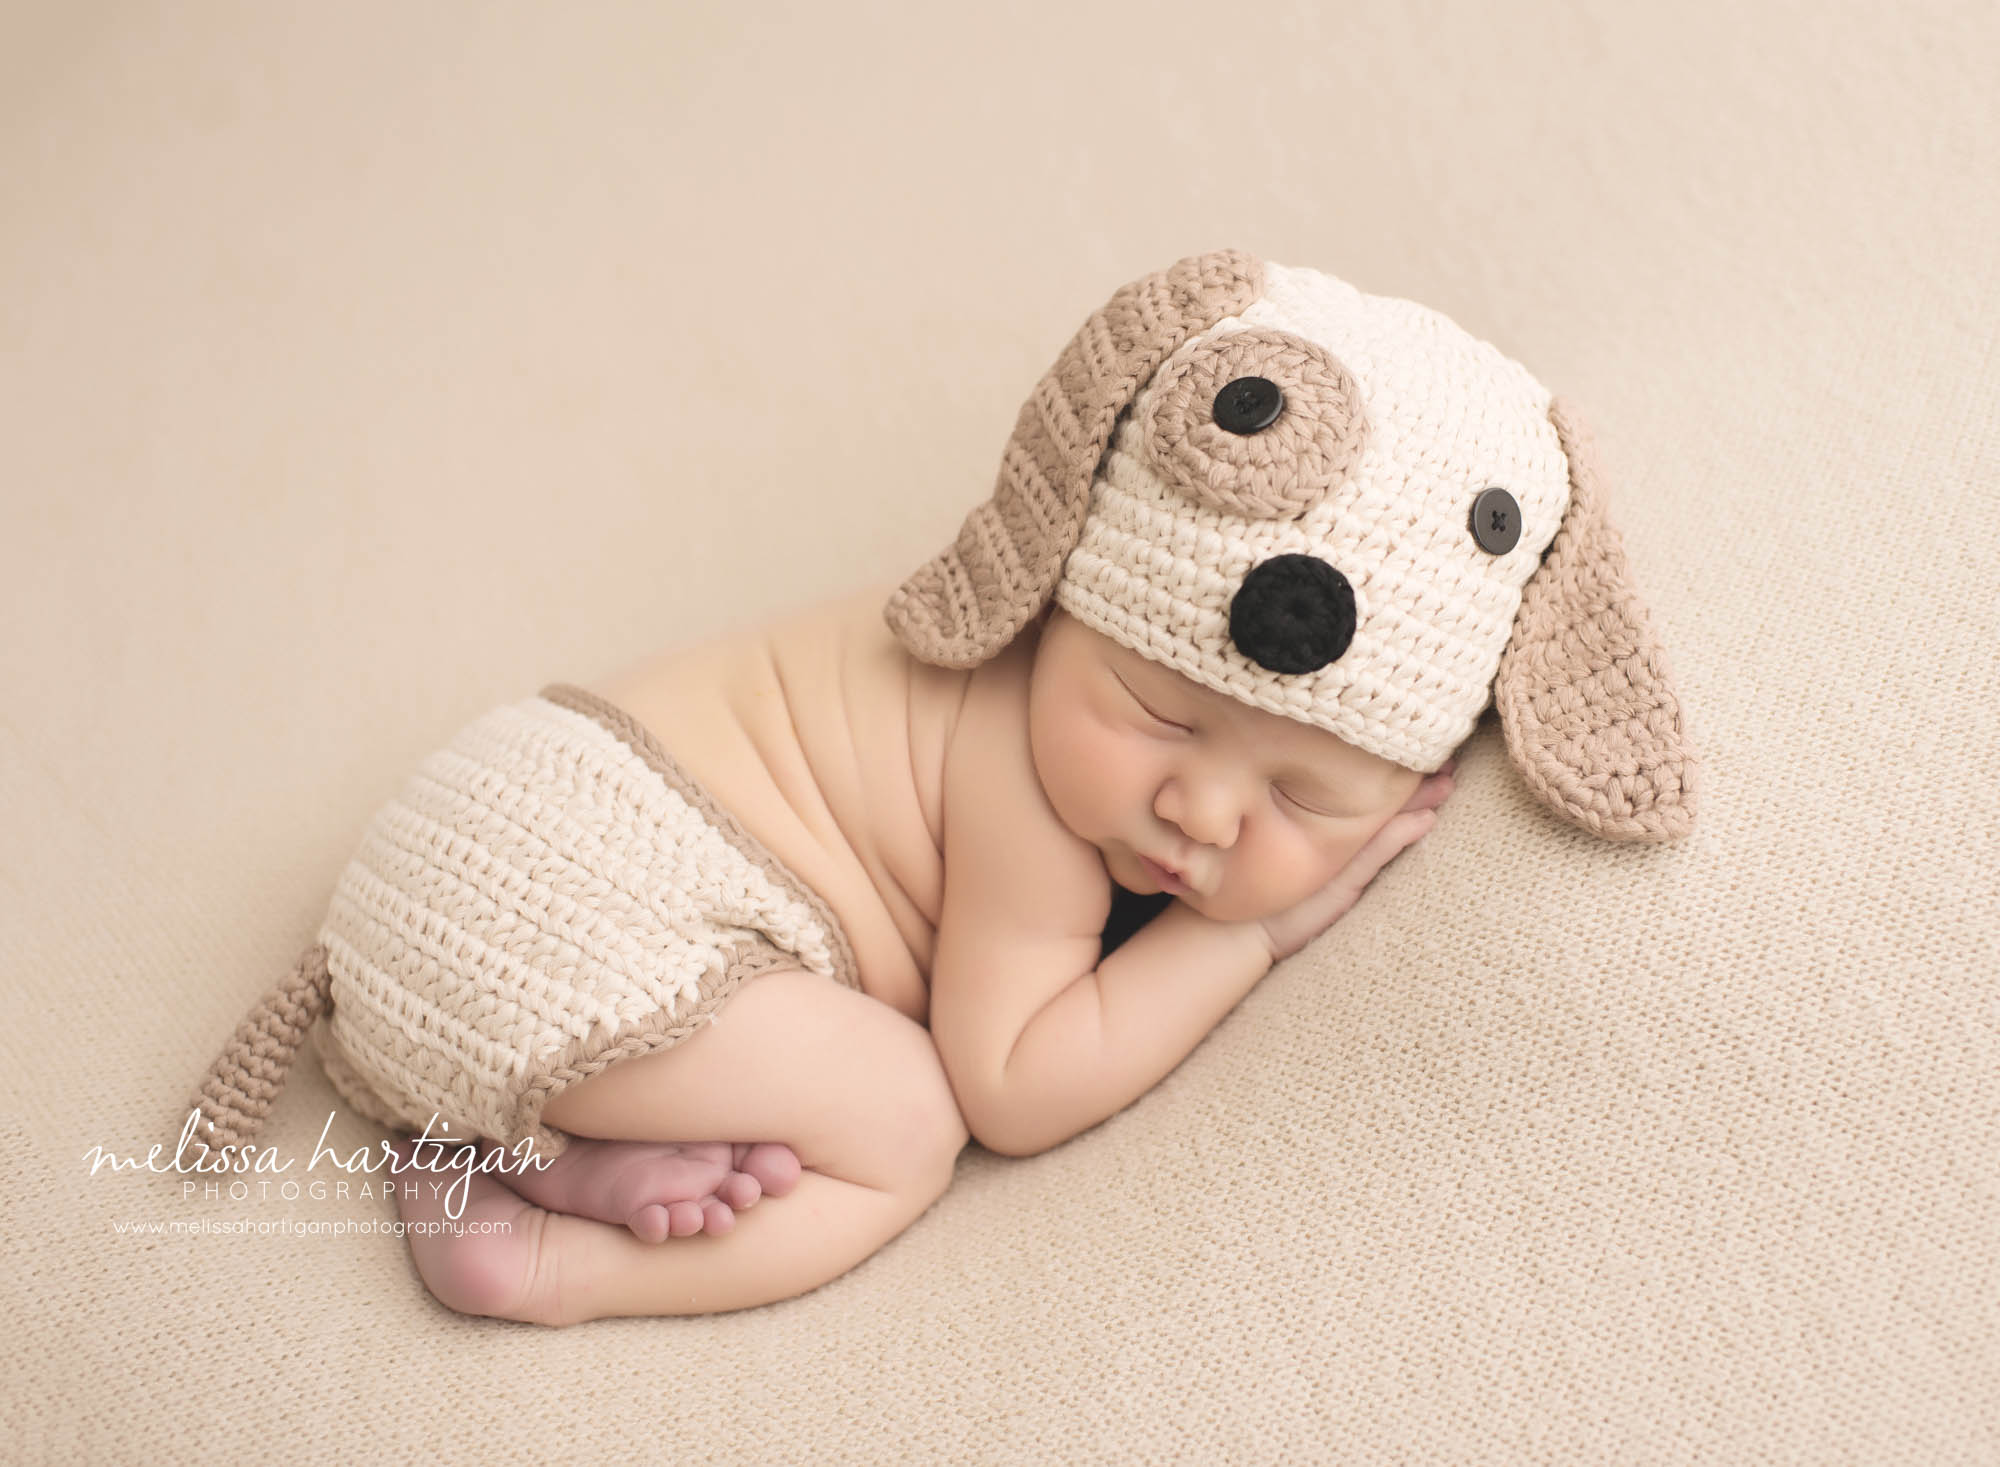 Melissa Hartigan Photography CT Newborn Photographer Braeden Newborn Session baby boy sleeping wearing knit dog hat and diaper cover